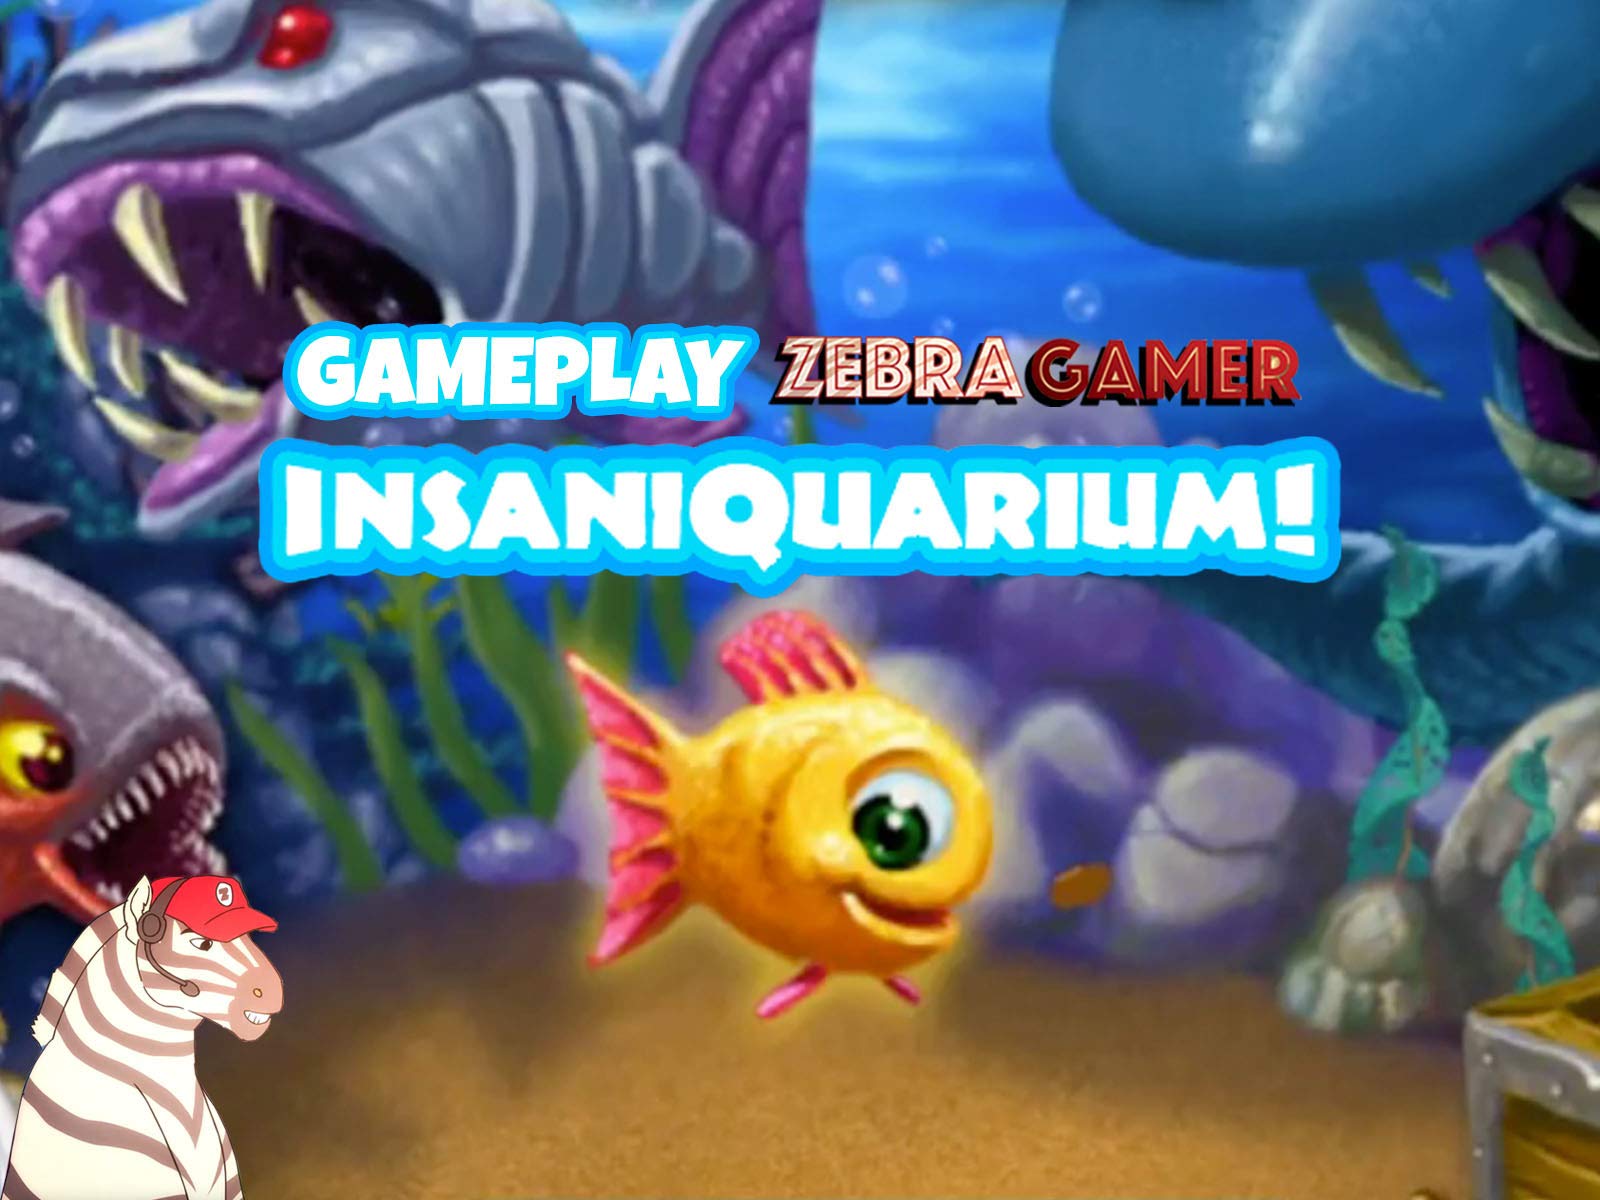 Watch Clip Insaniquarium Gameplay Zebra Gamer Prime Video